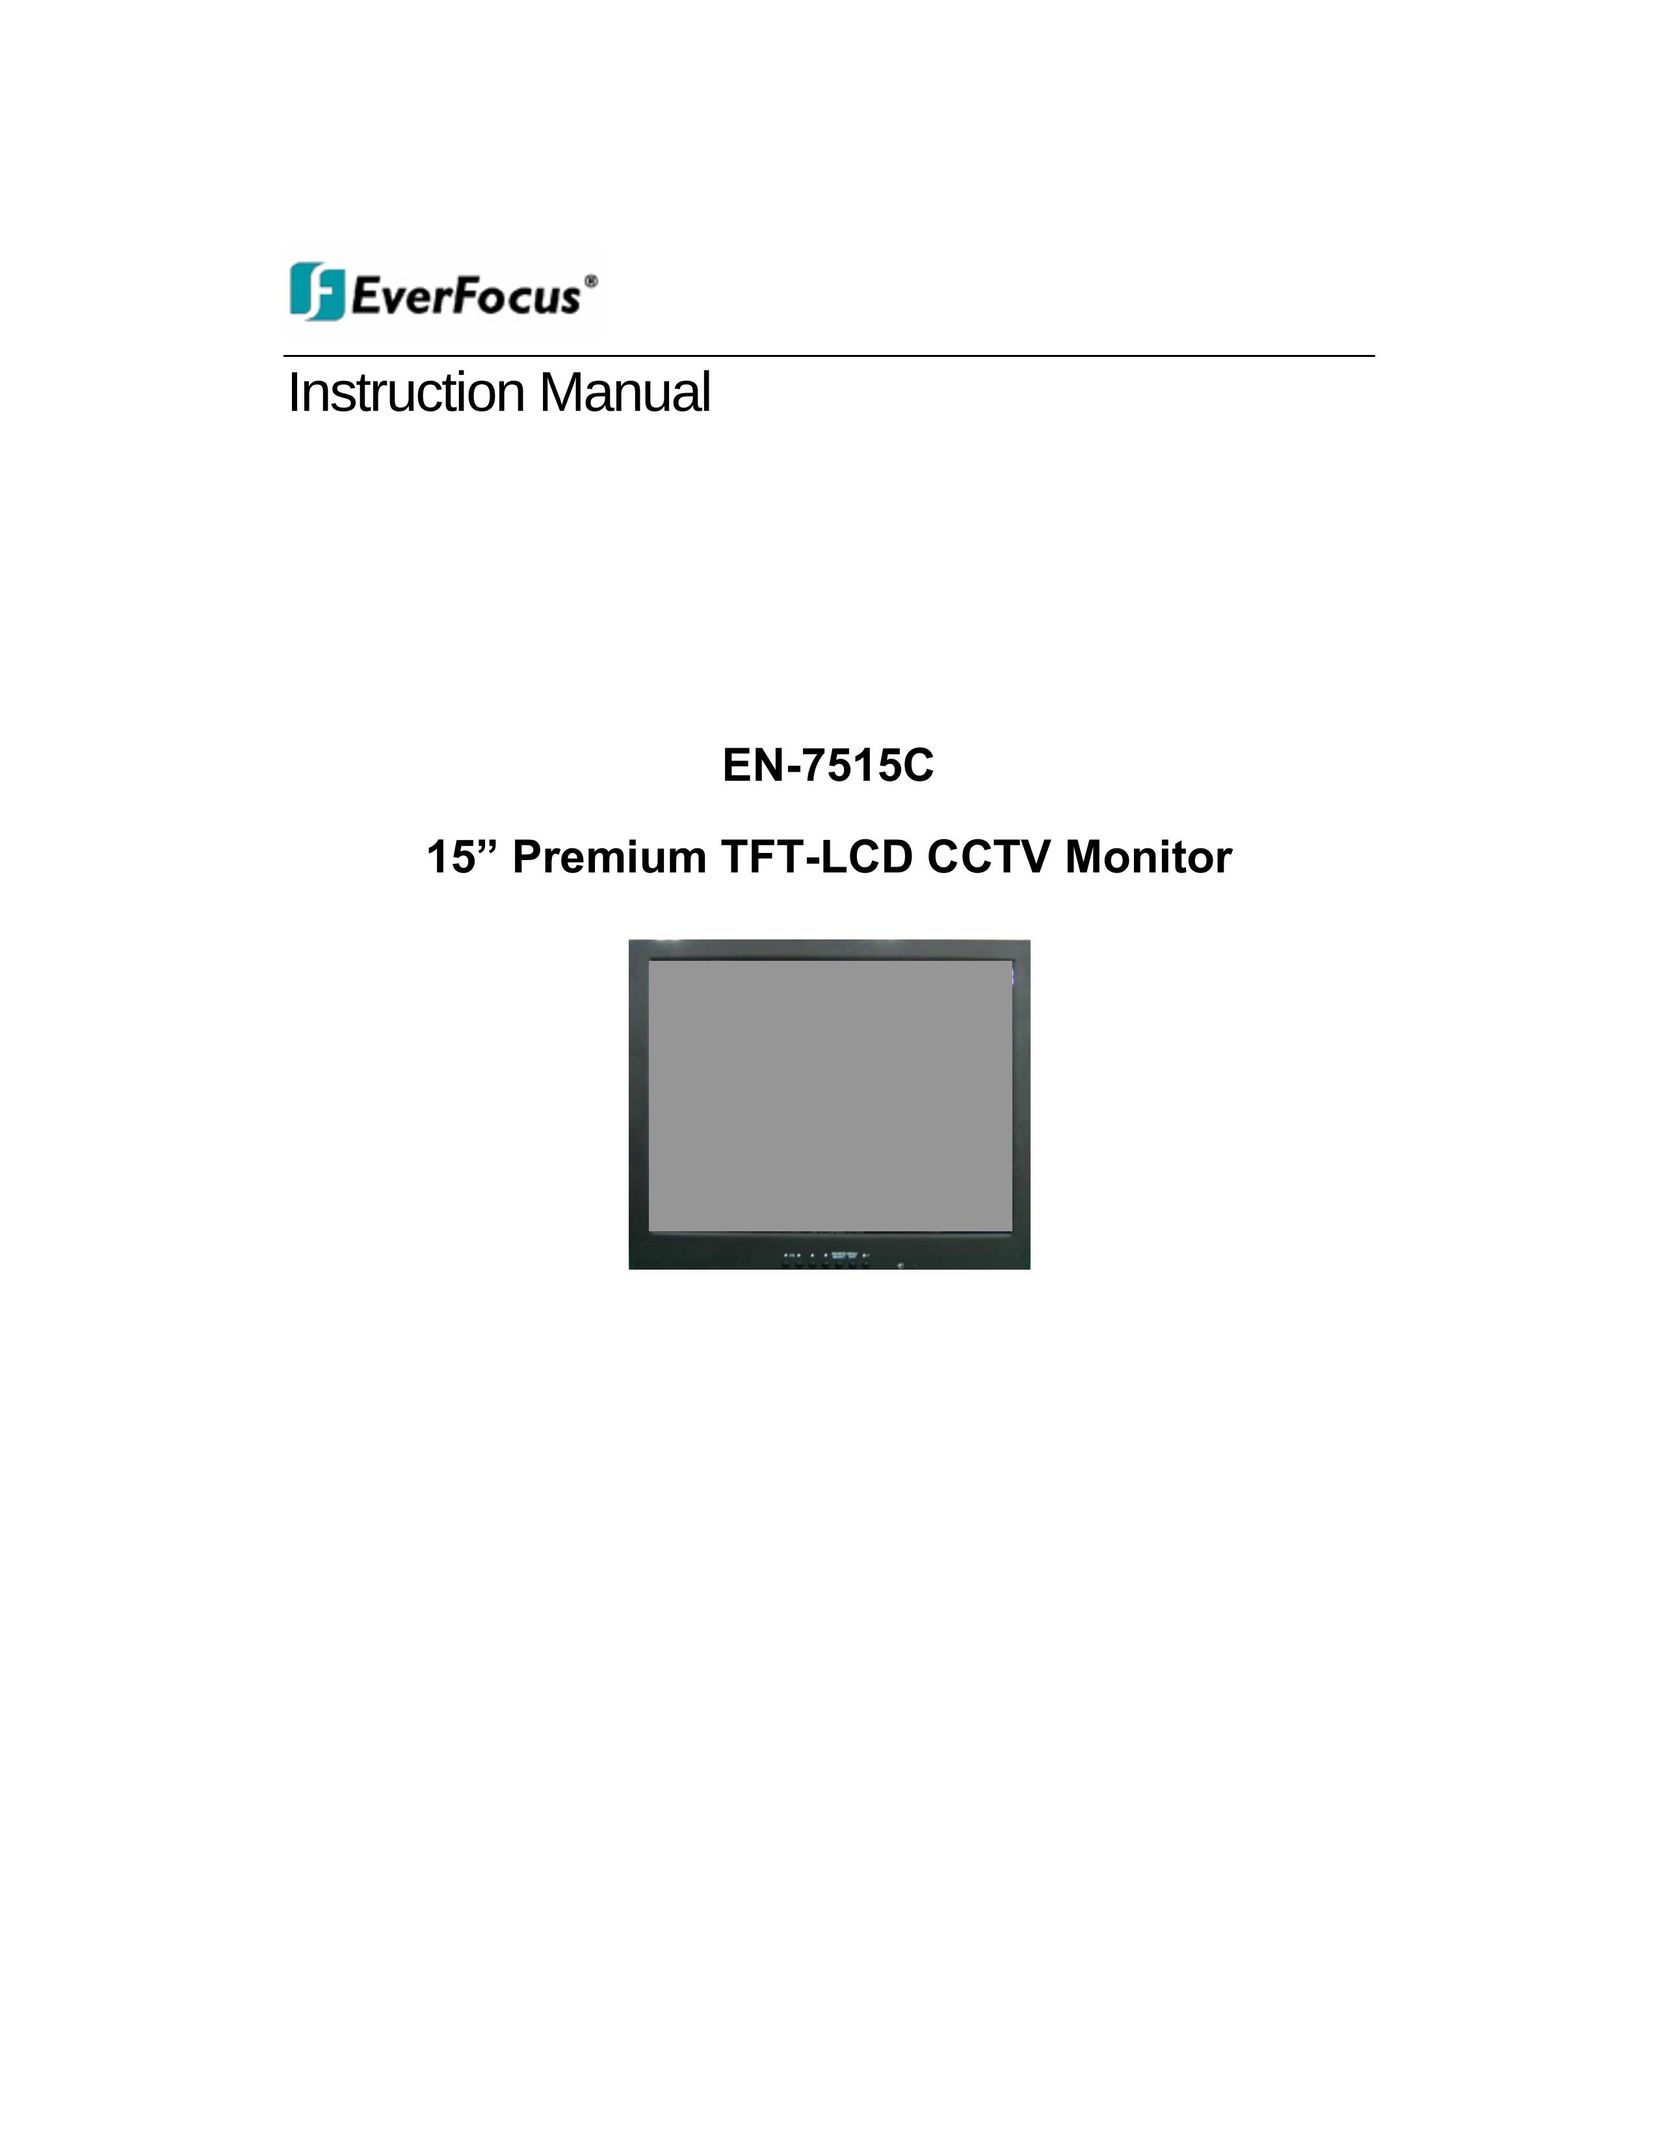 EverFocus EN-7515C Car Video System User Manual